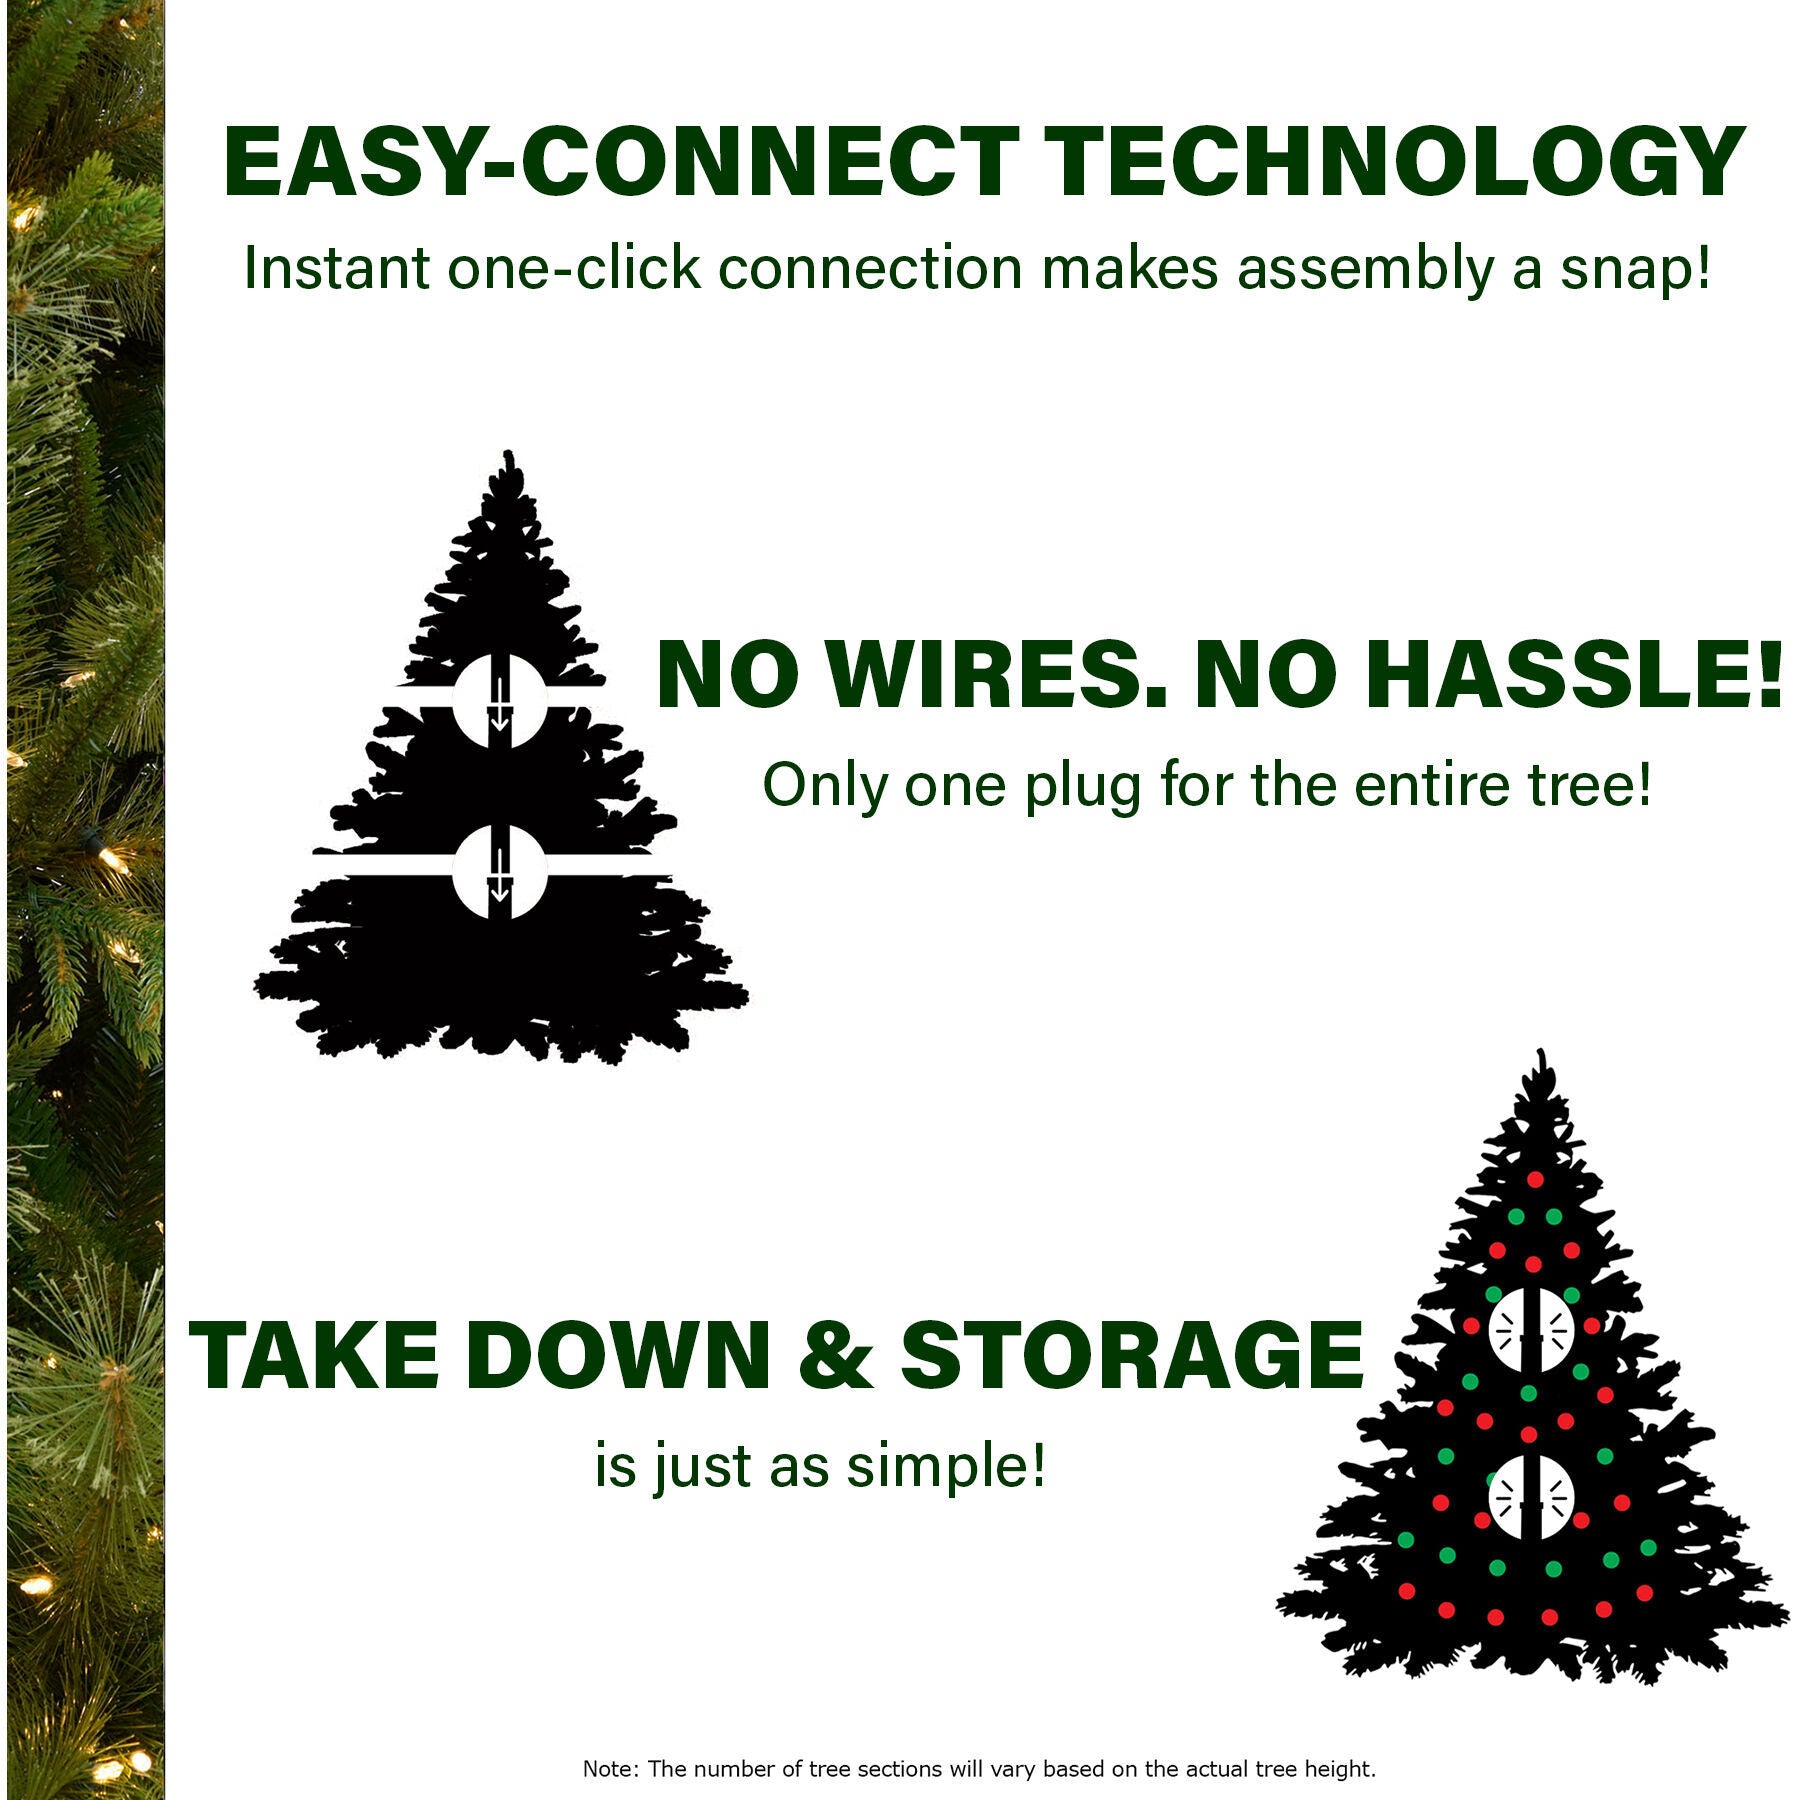 Fraser Hill Farm -  7.5 Ft. Buffalo Fir Slim Artificial Christmas Tree with Multi-Color LED String Lighting